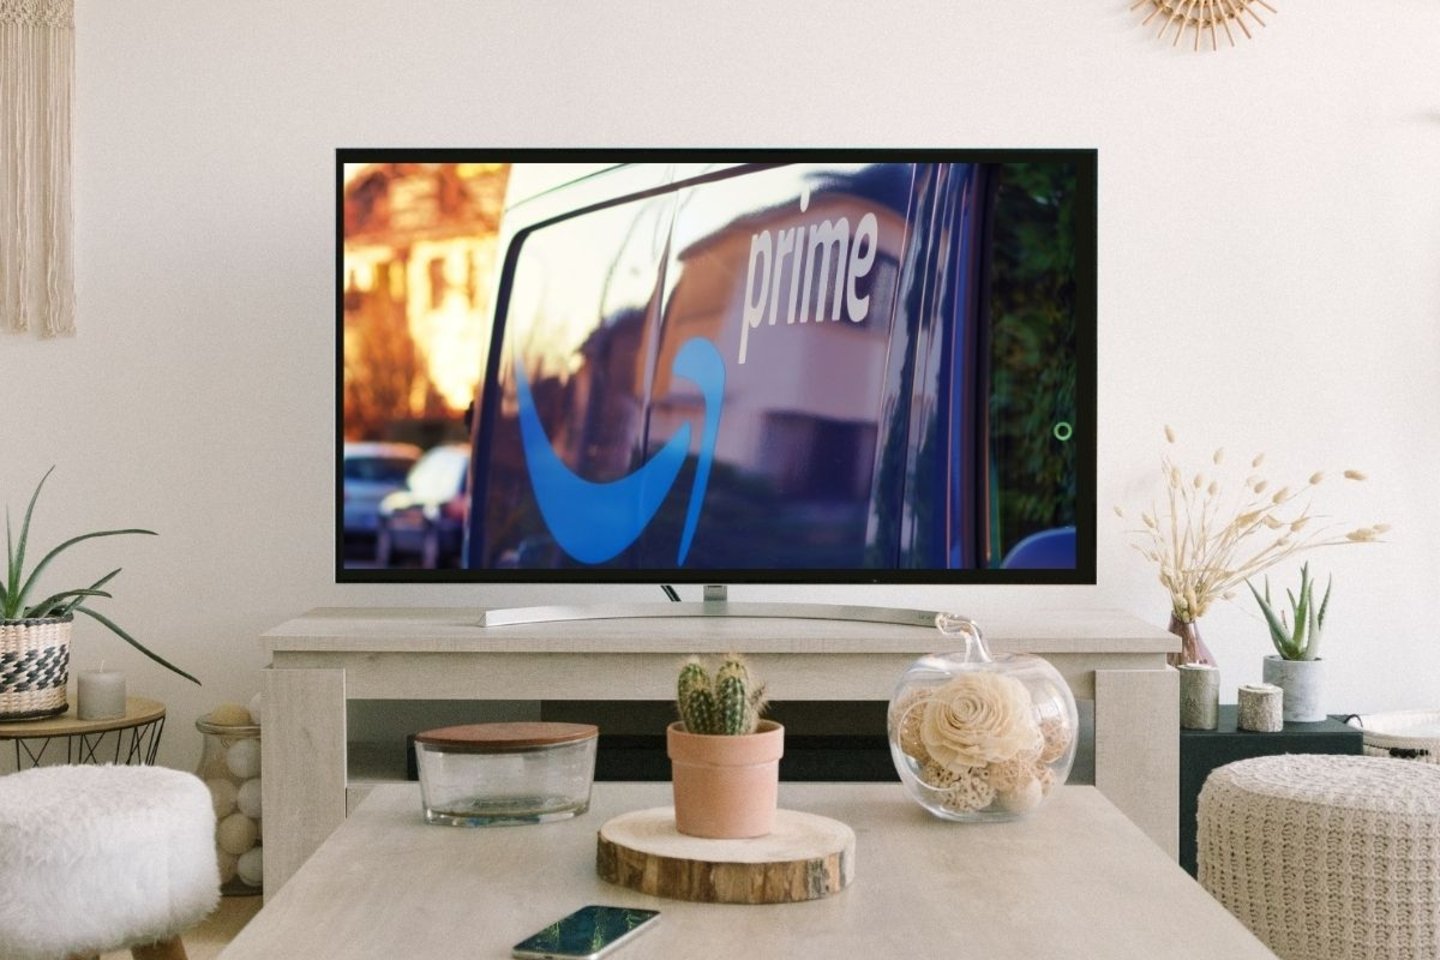 Televisor con una furgoneta de Amazon en la pantalla.